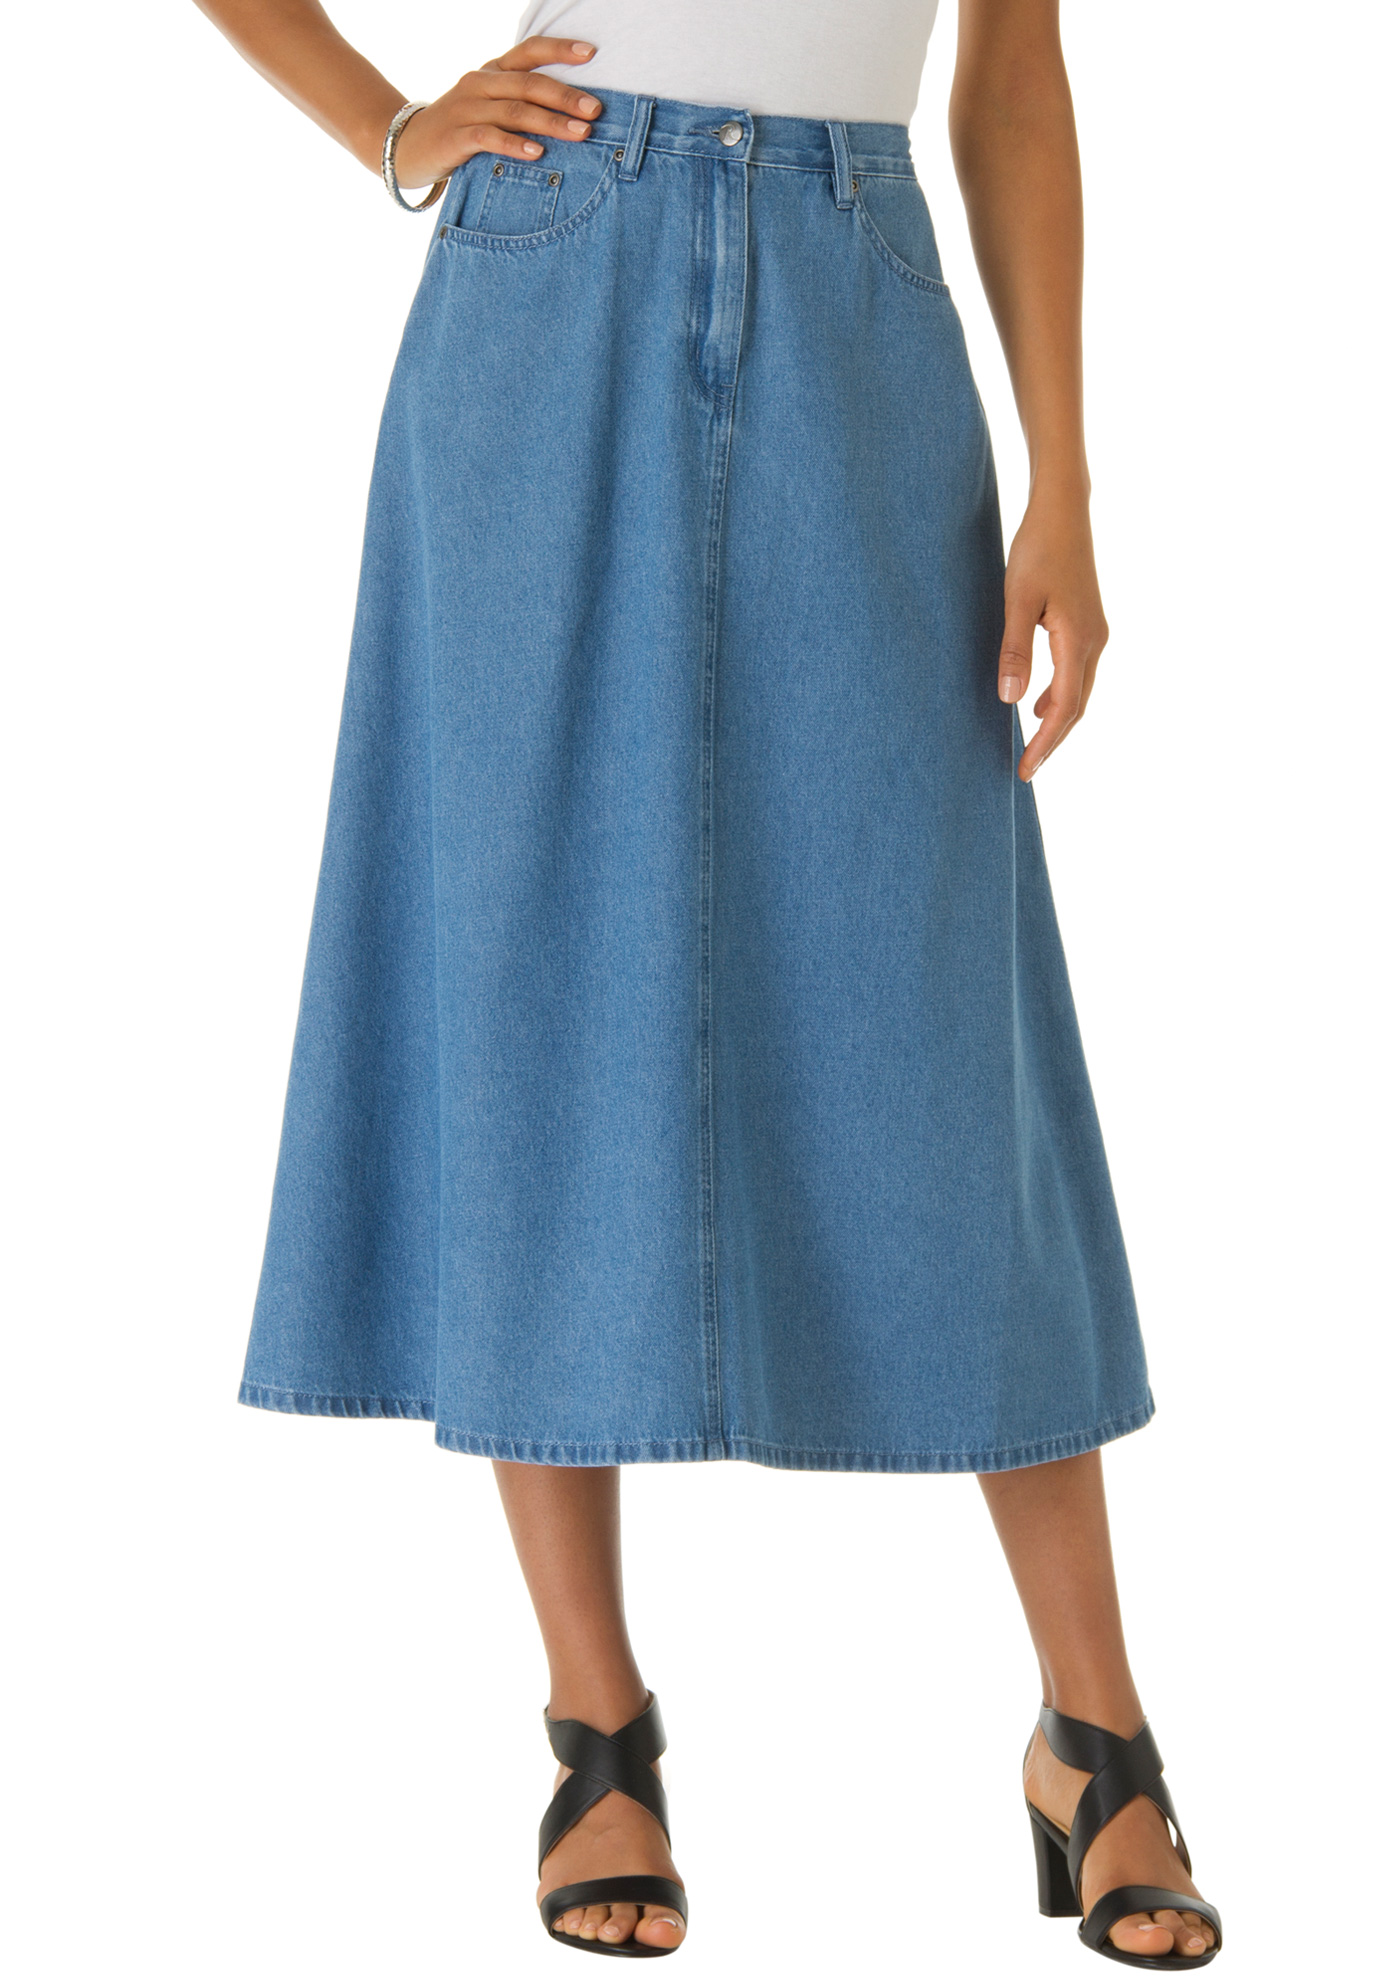 Pola Skirt A Line : Buy KOOVS Grey Wrap Front A Line Skirt for Girls